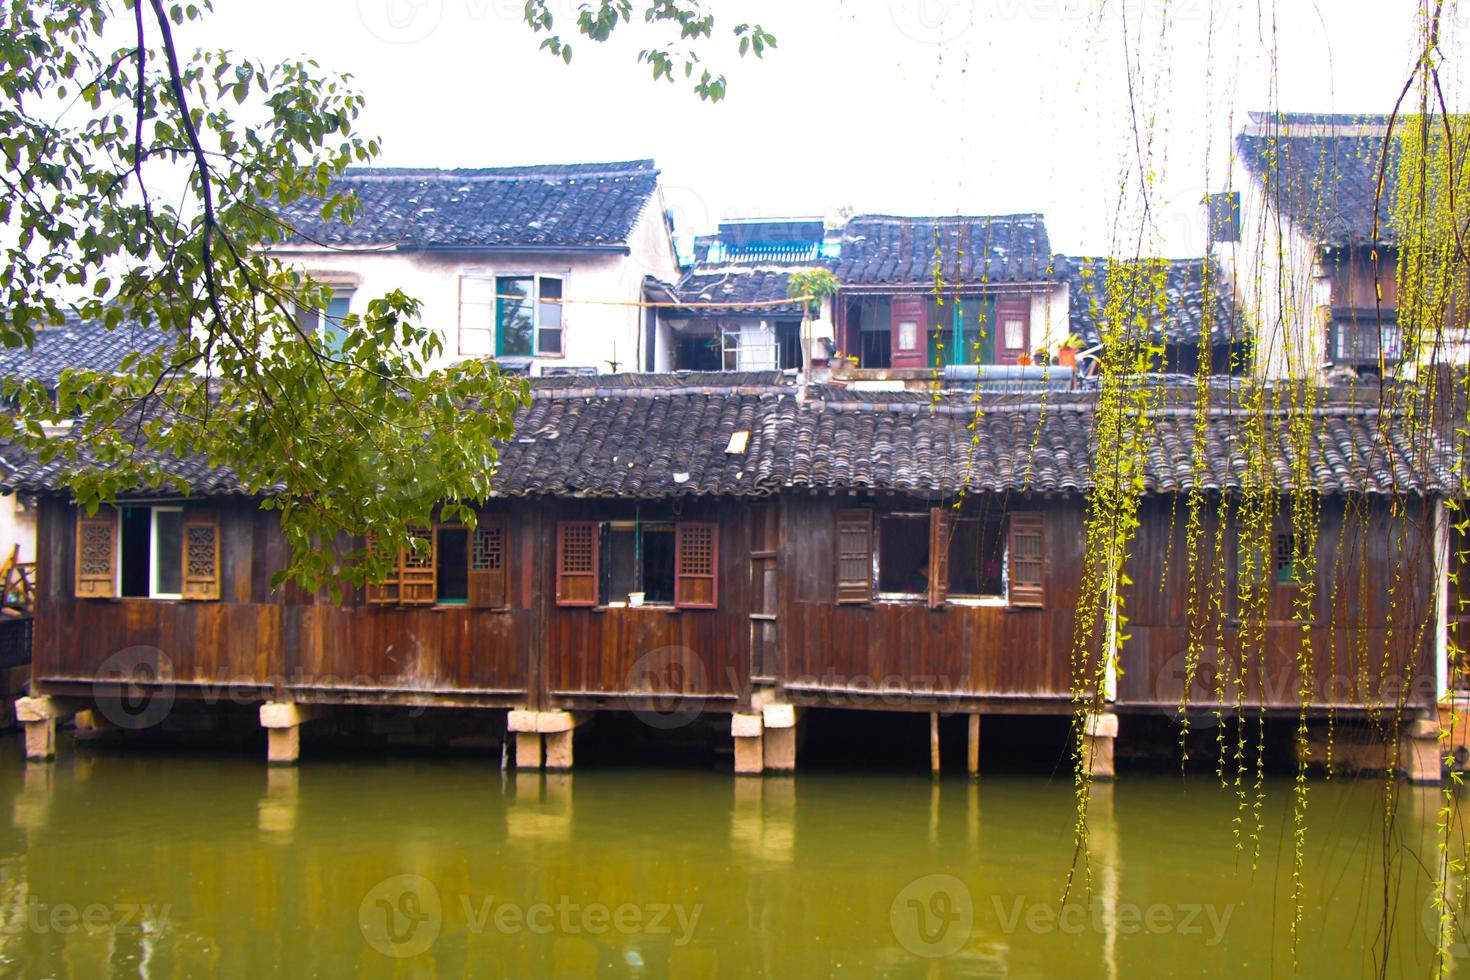 Beautiful Chinese water town photo